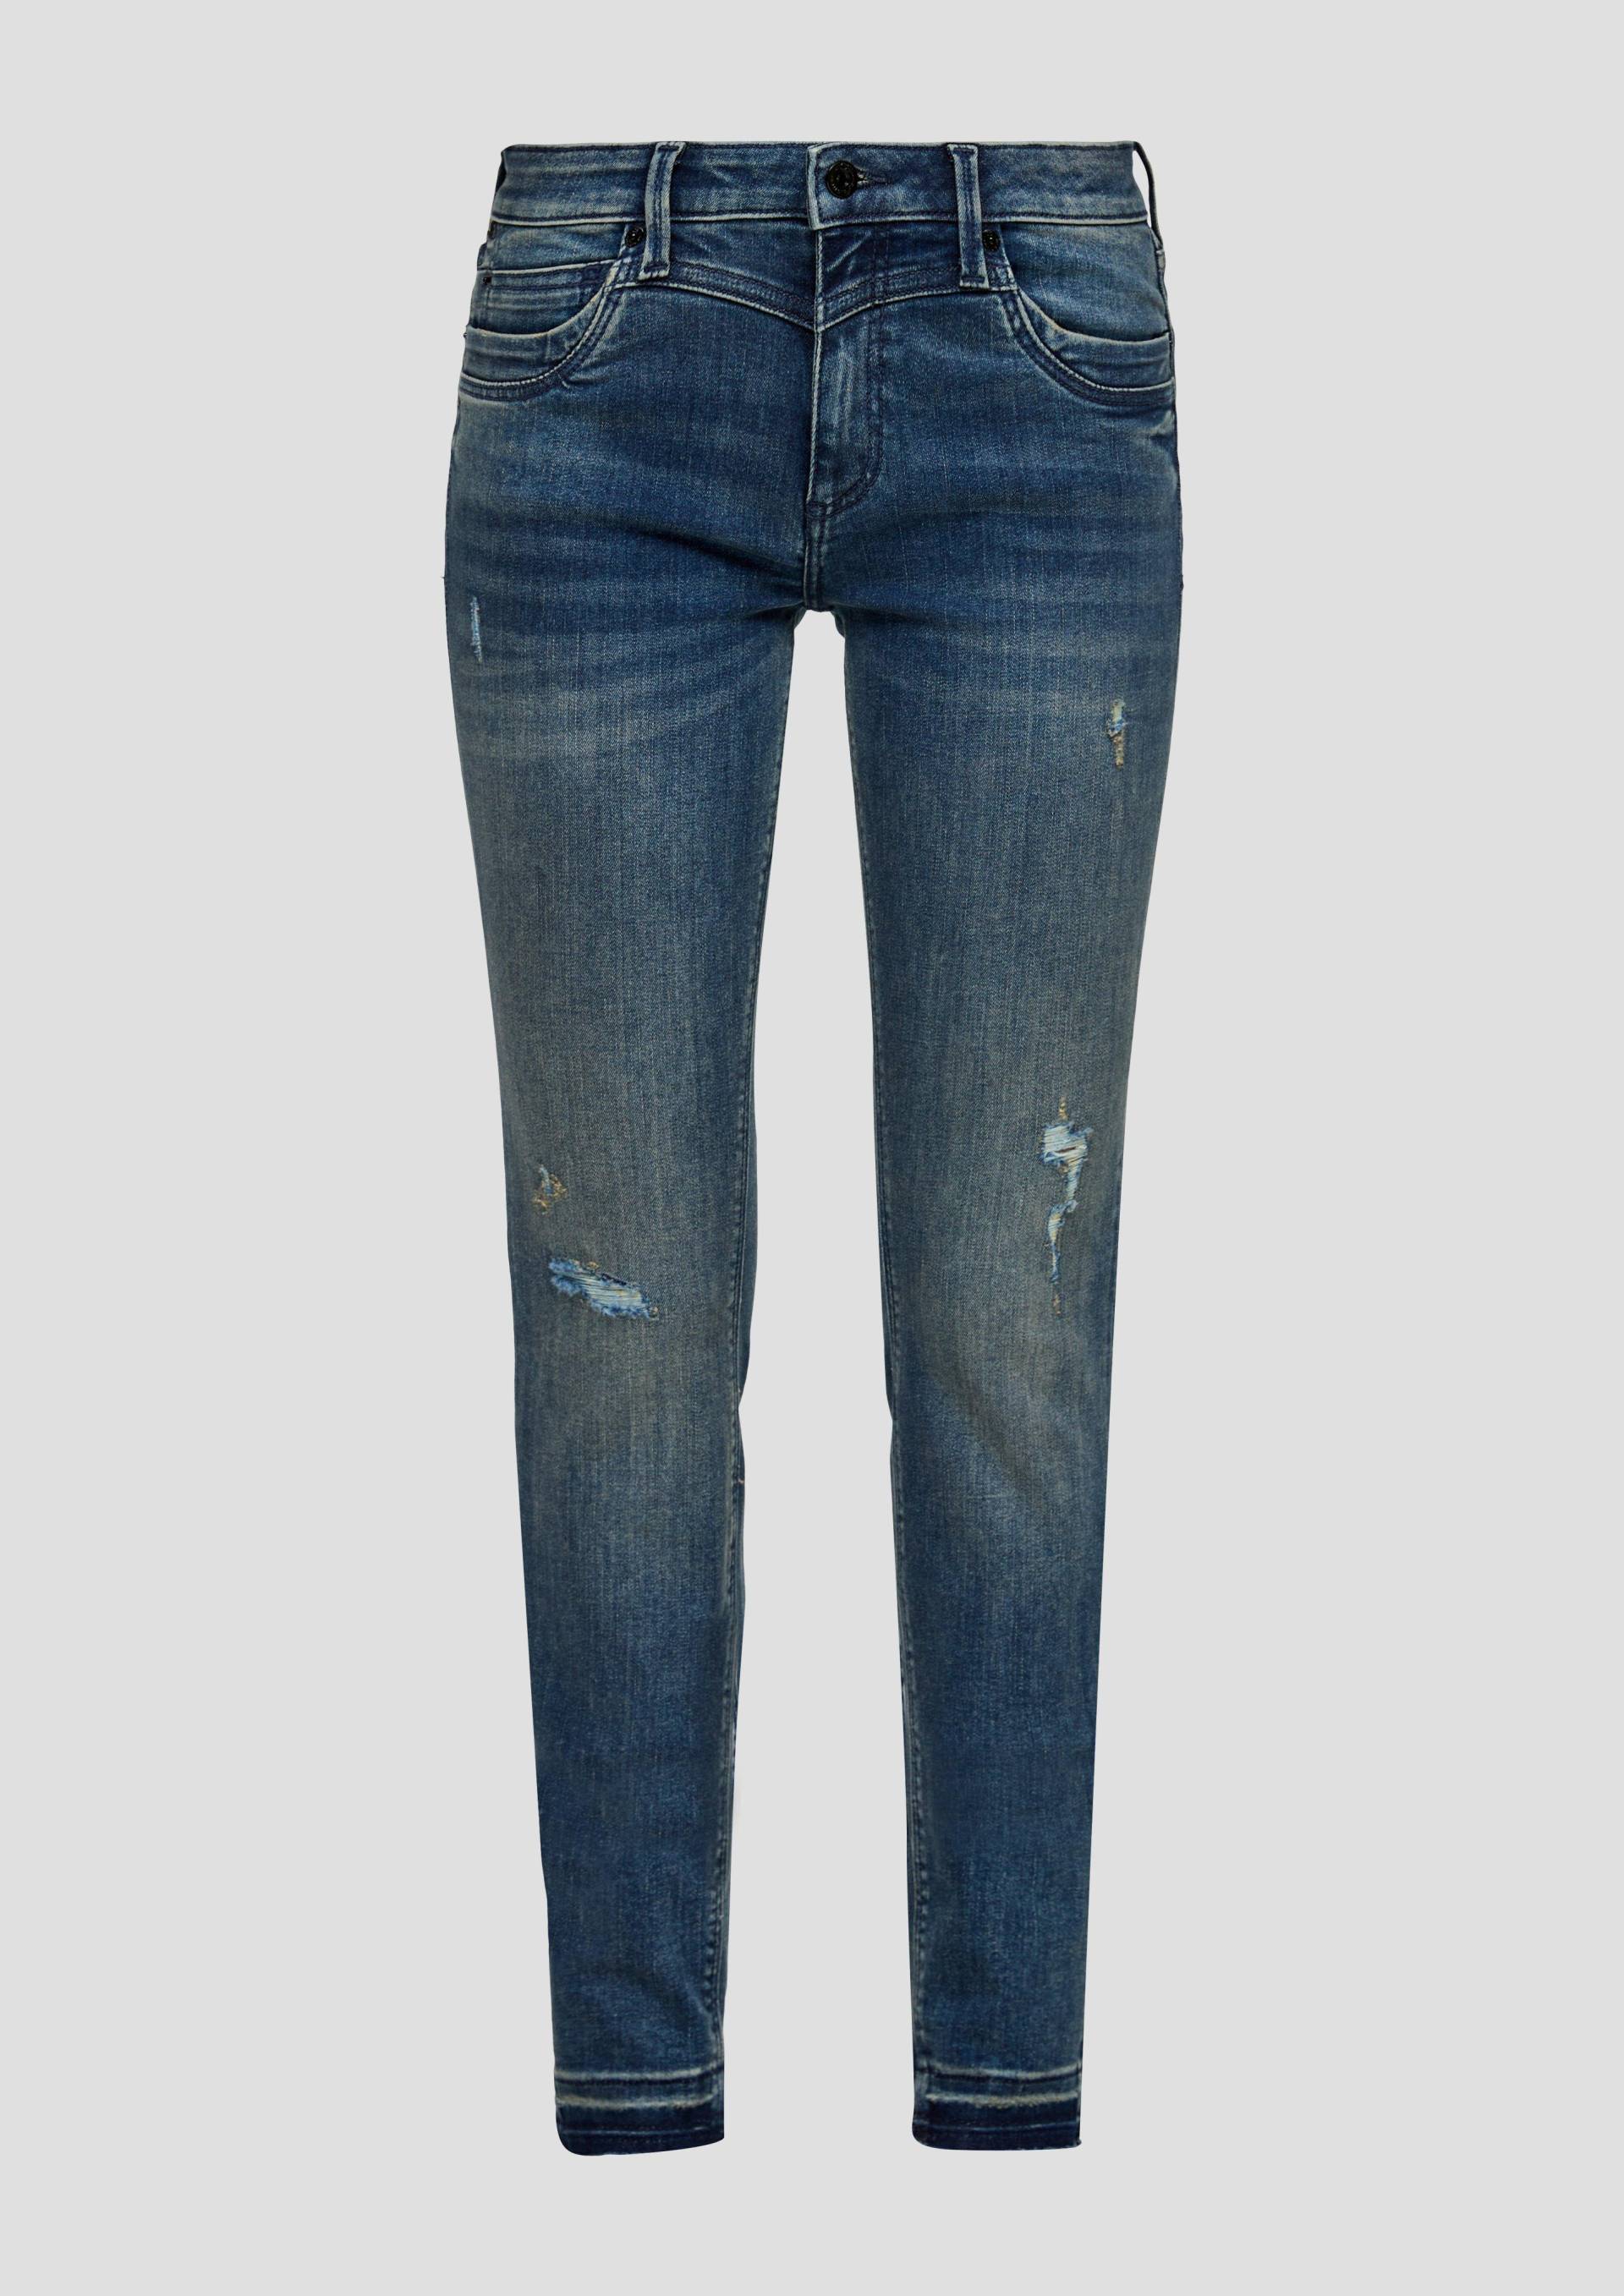 QS - Jeans Sadie / Skinny Fit / Mid Rise / Skinny Leg, Damen, blau von QS